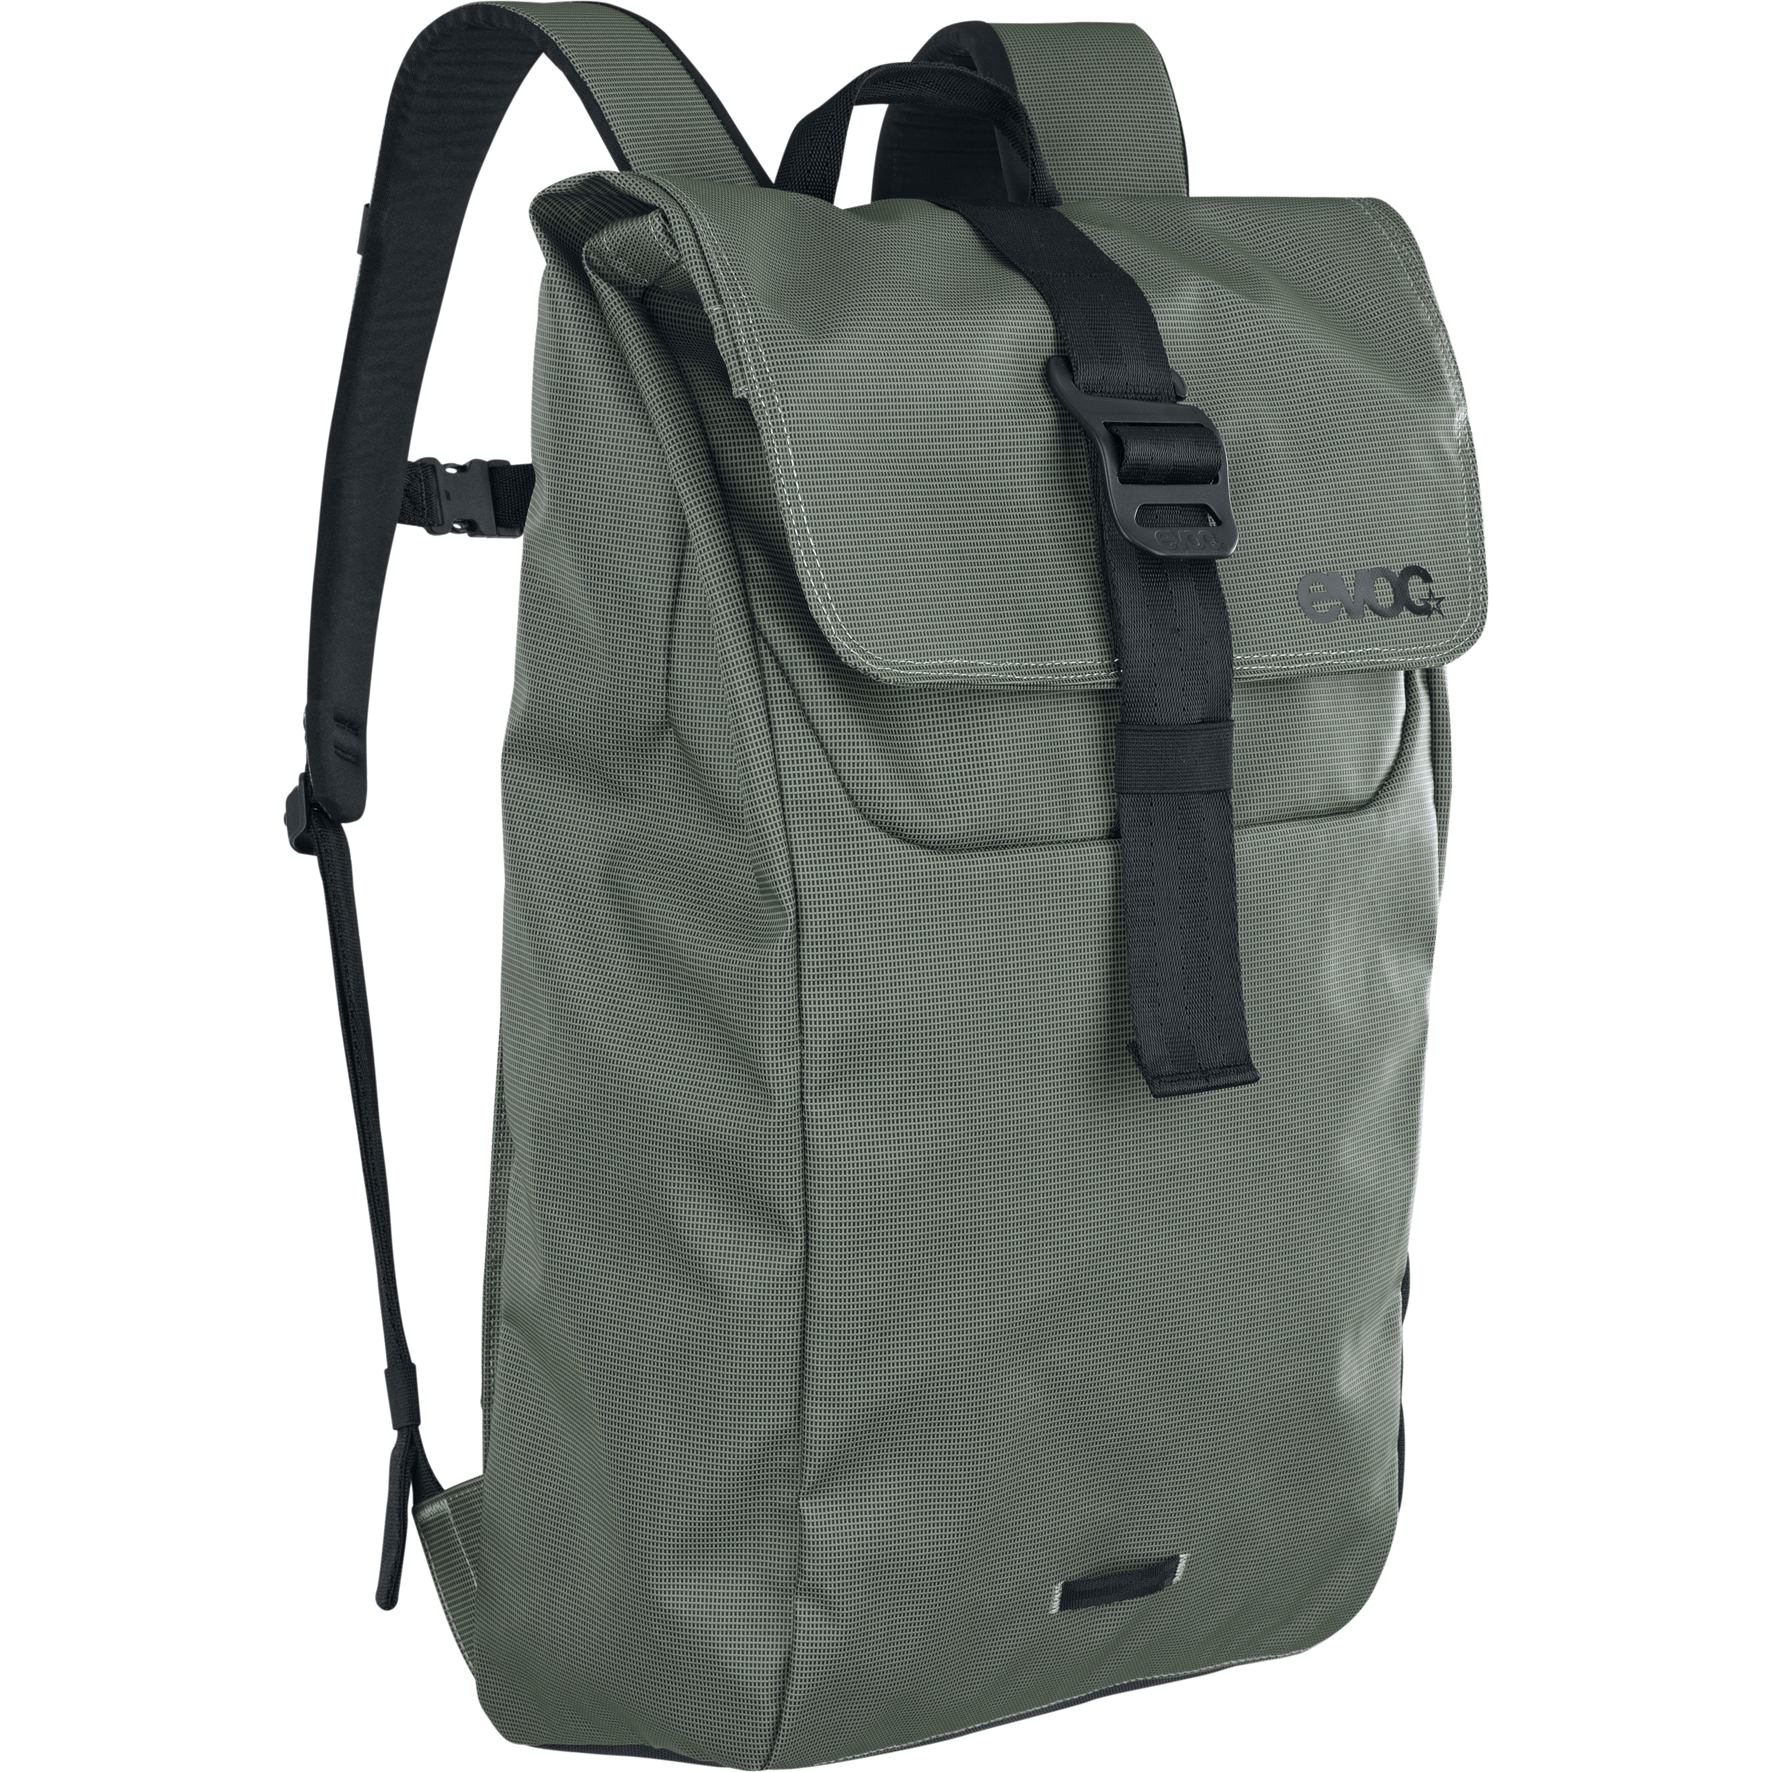 Picture of EVOC Duffle Backpack 16 - Dark Olive - Black